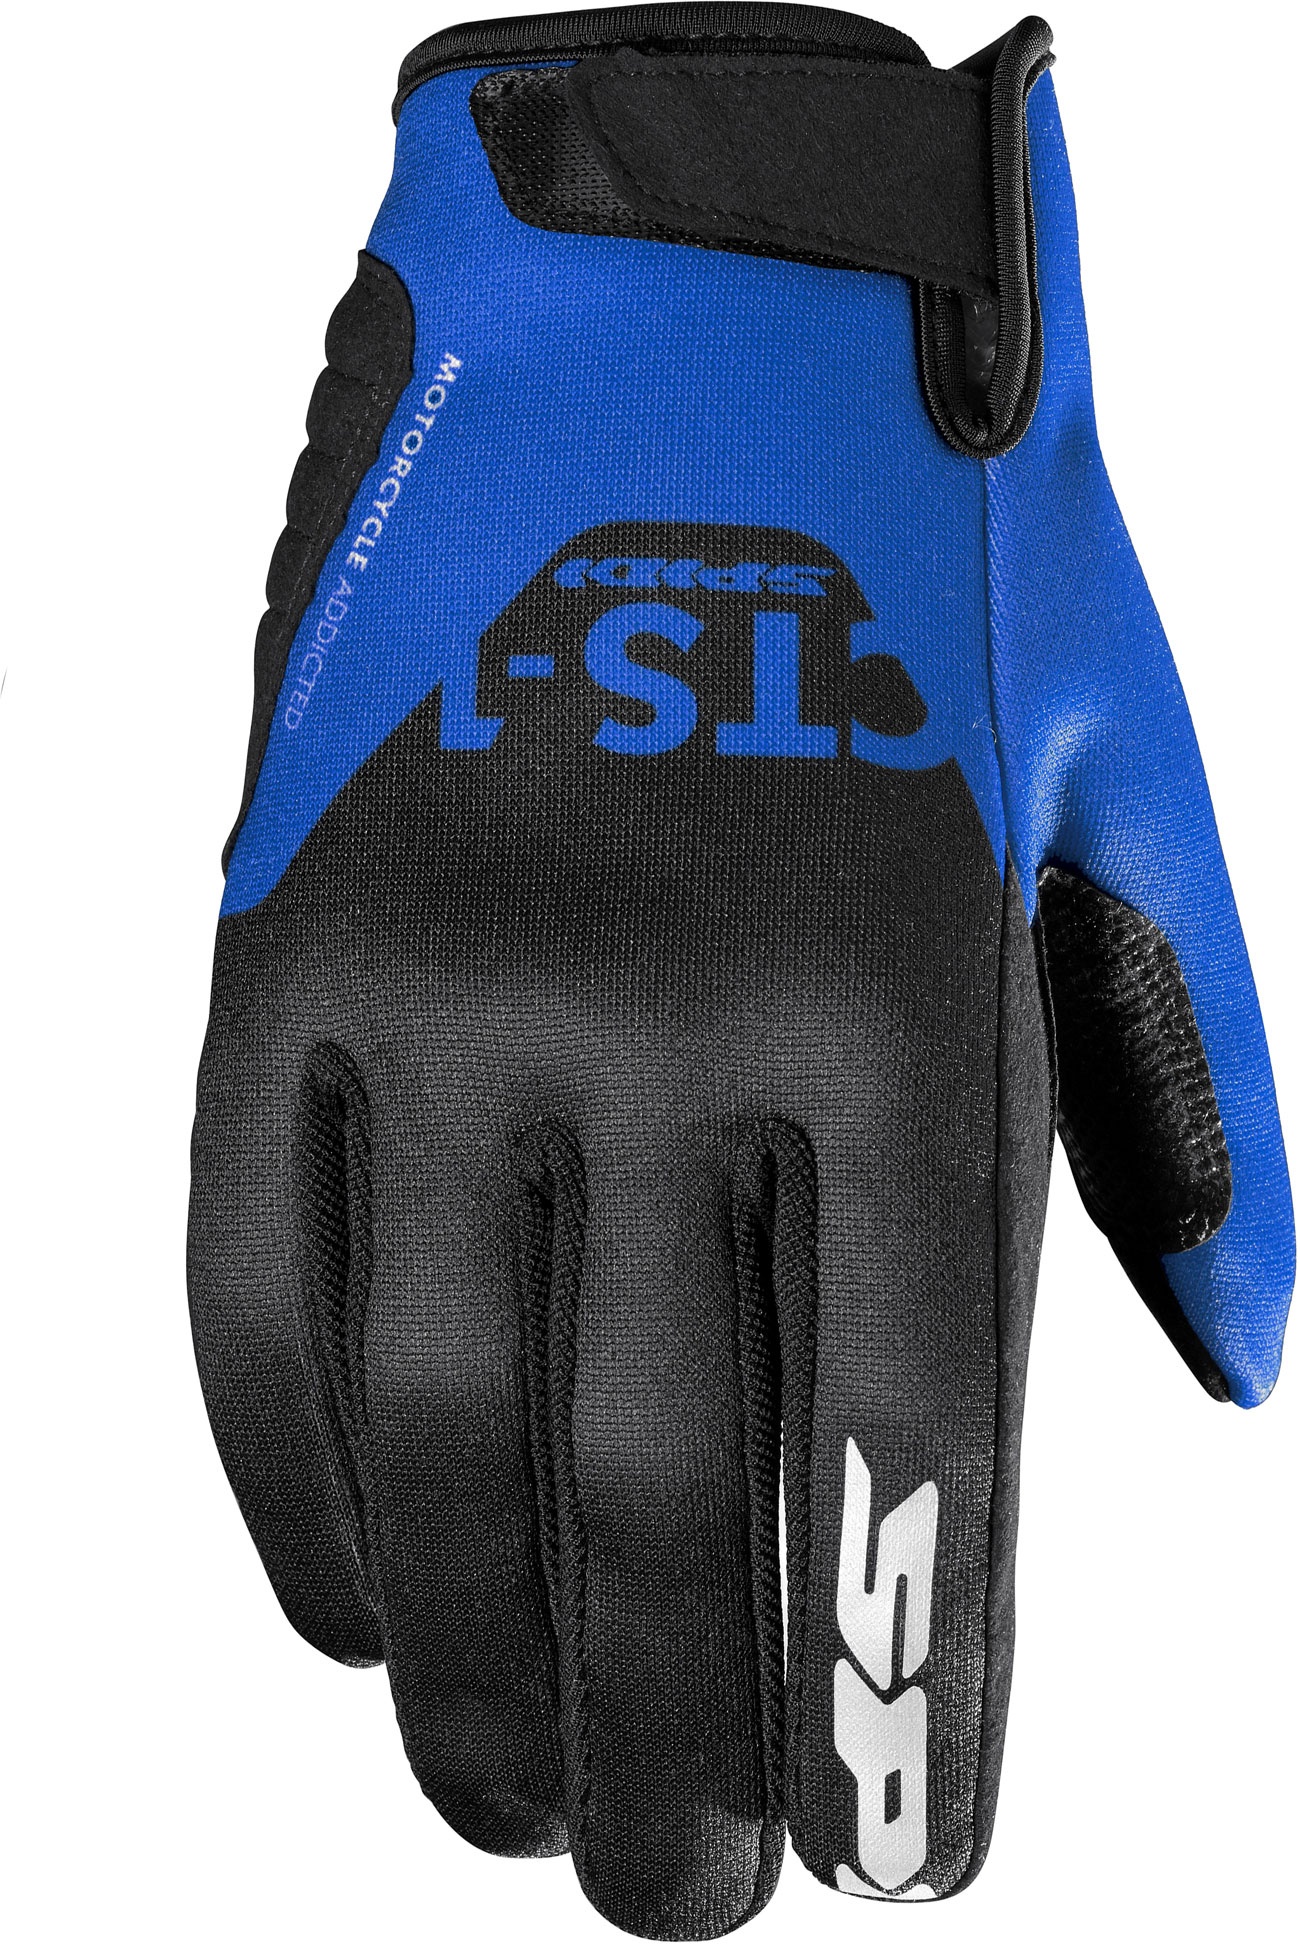 Spidi CTS-1, gants - Noir/Bleu - M